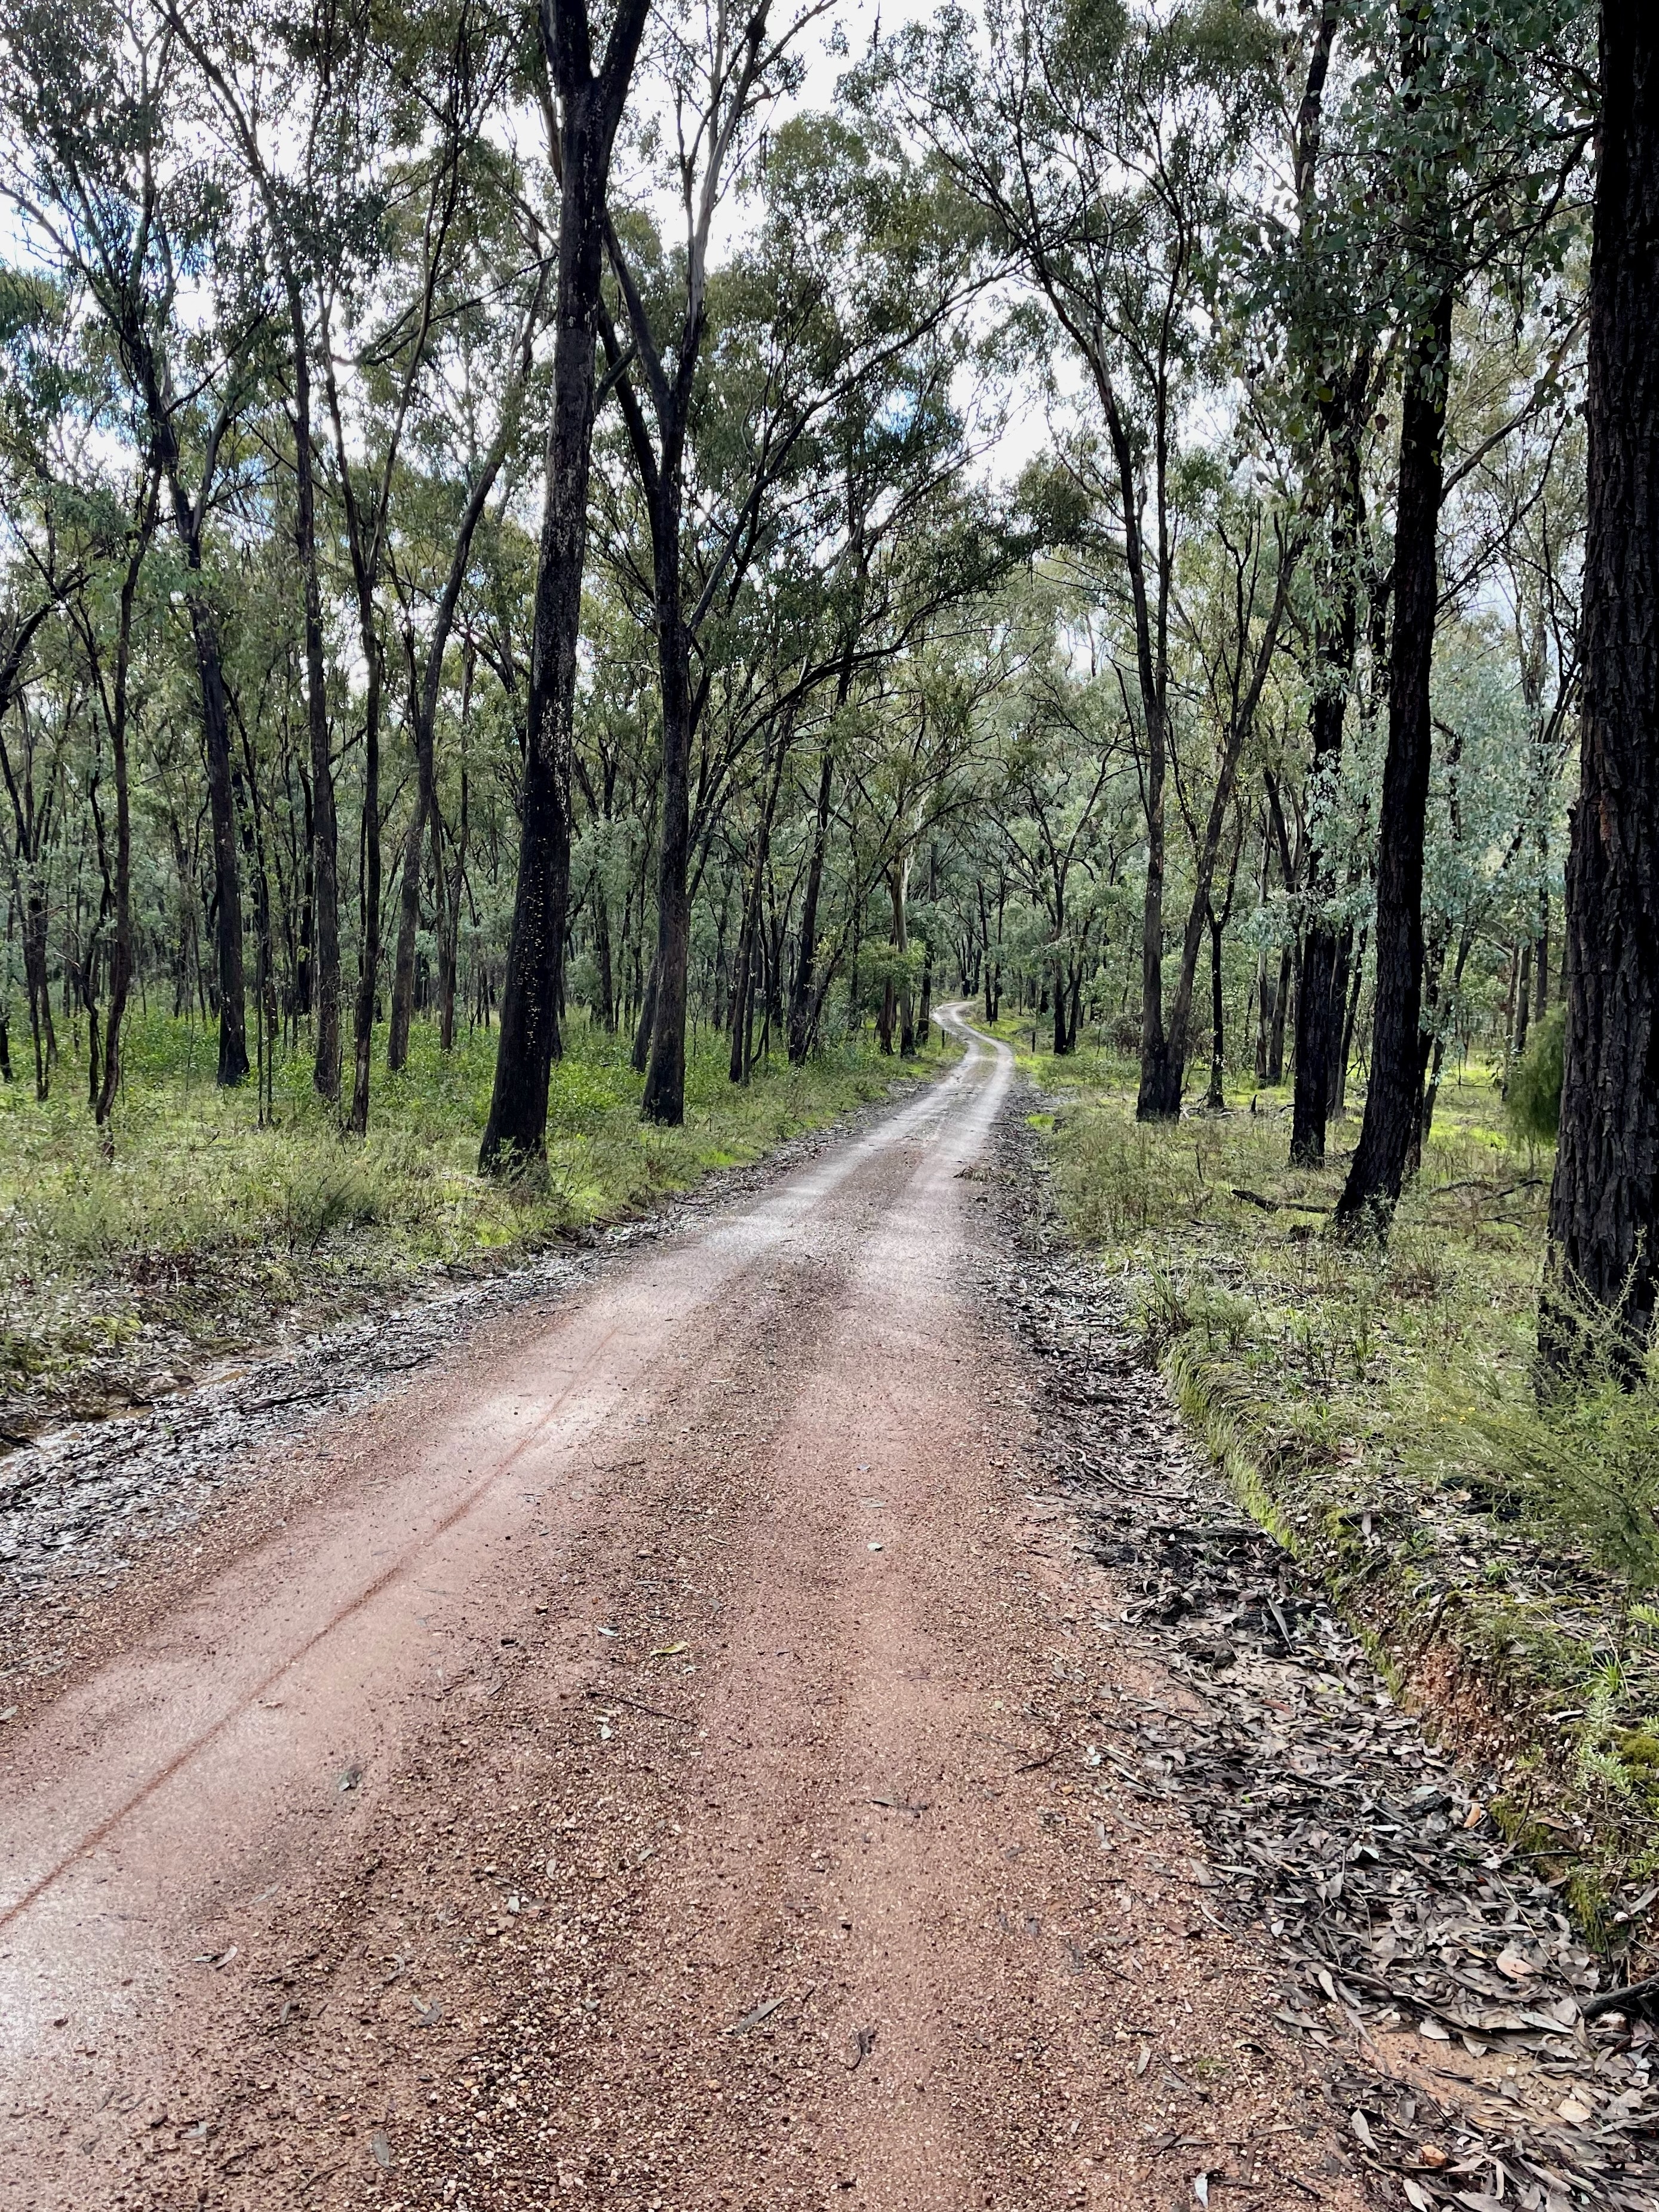 A gravel road winding through open farmland and native bush